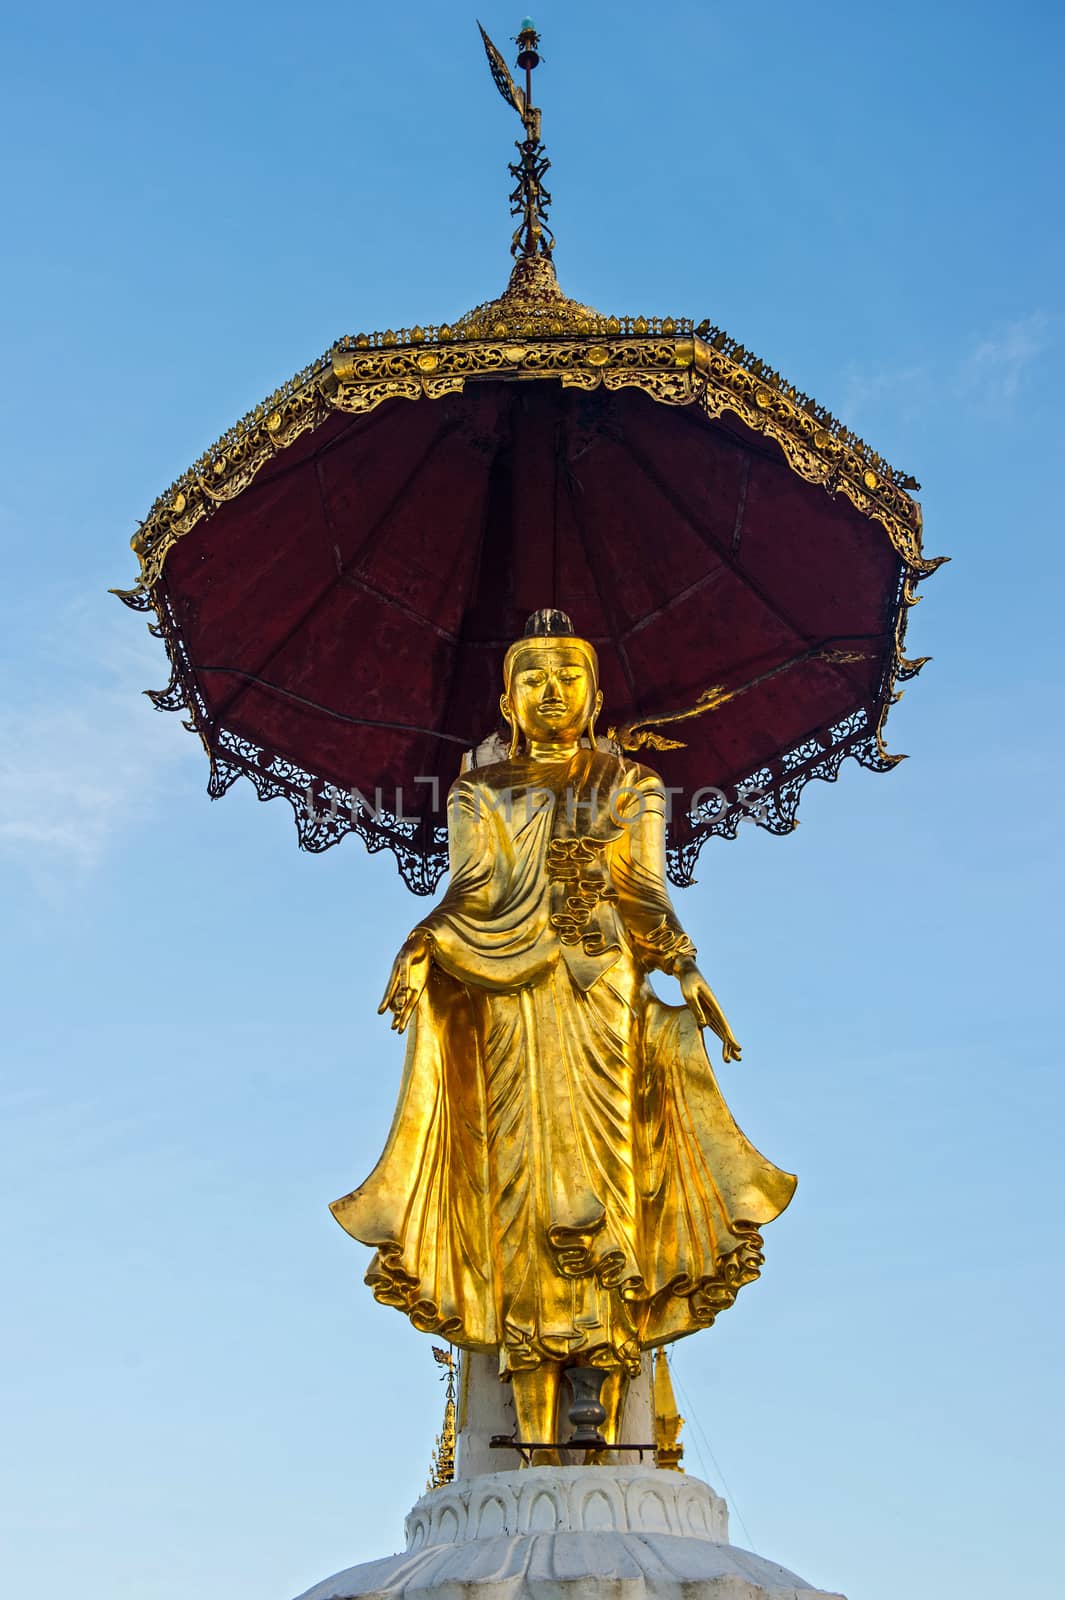 Buddha statue on top of pagoda around Shwedagon Pagoda - Yangon, by think4photop